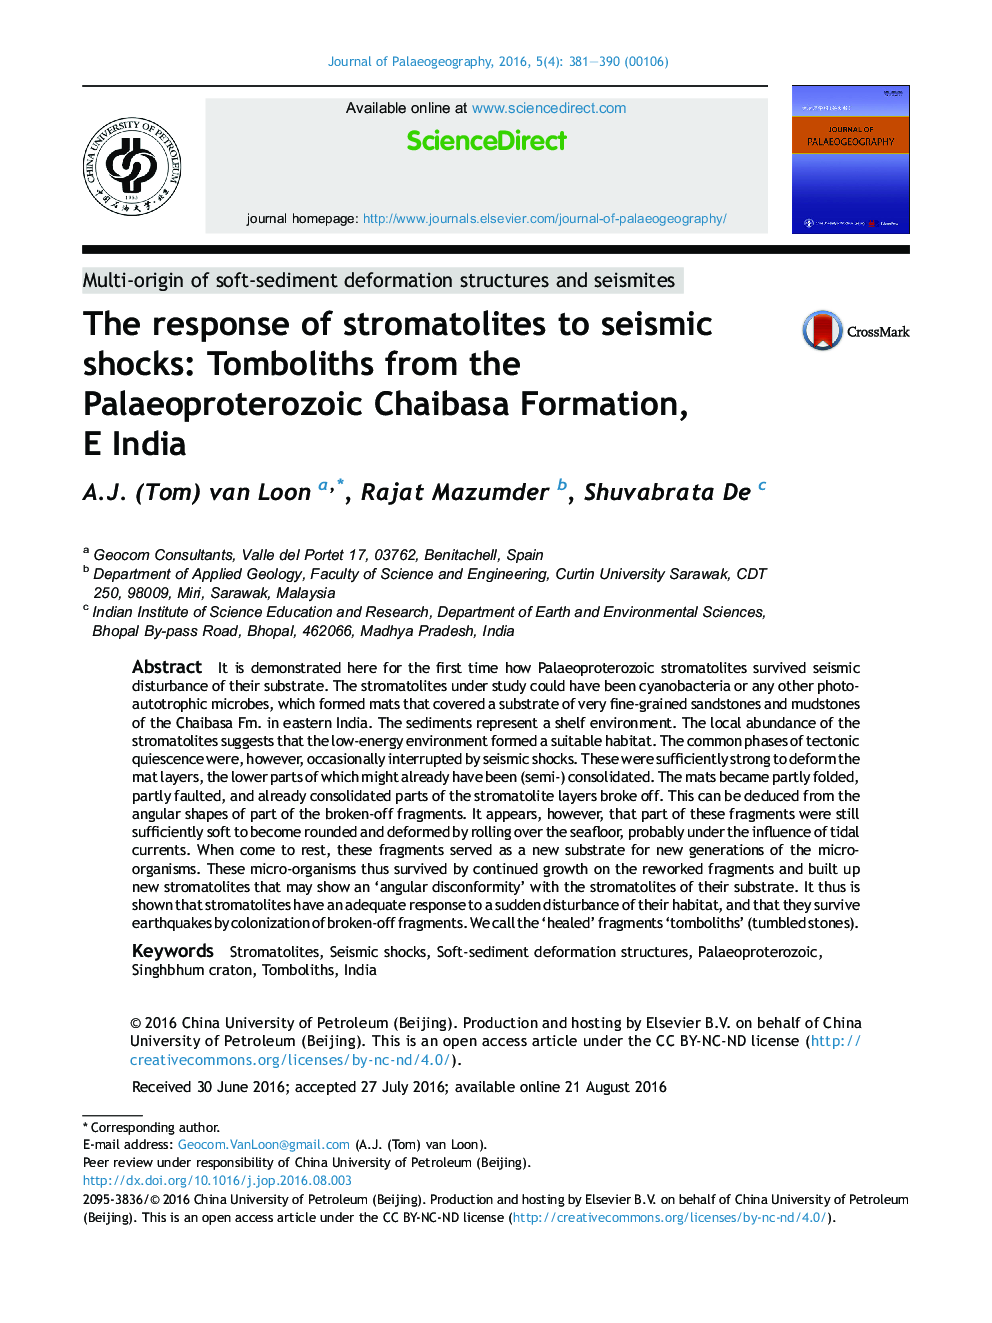 The response of stromatolites to seismic shocks: Tomboliths from the Palaeoproterozoic Chaibasa Formation, E India 